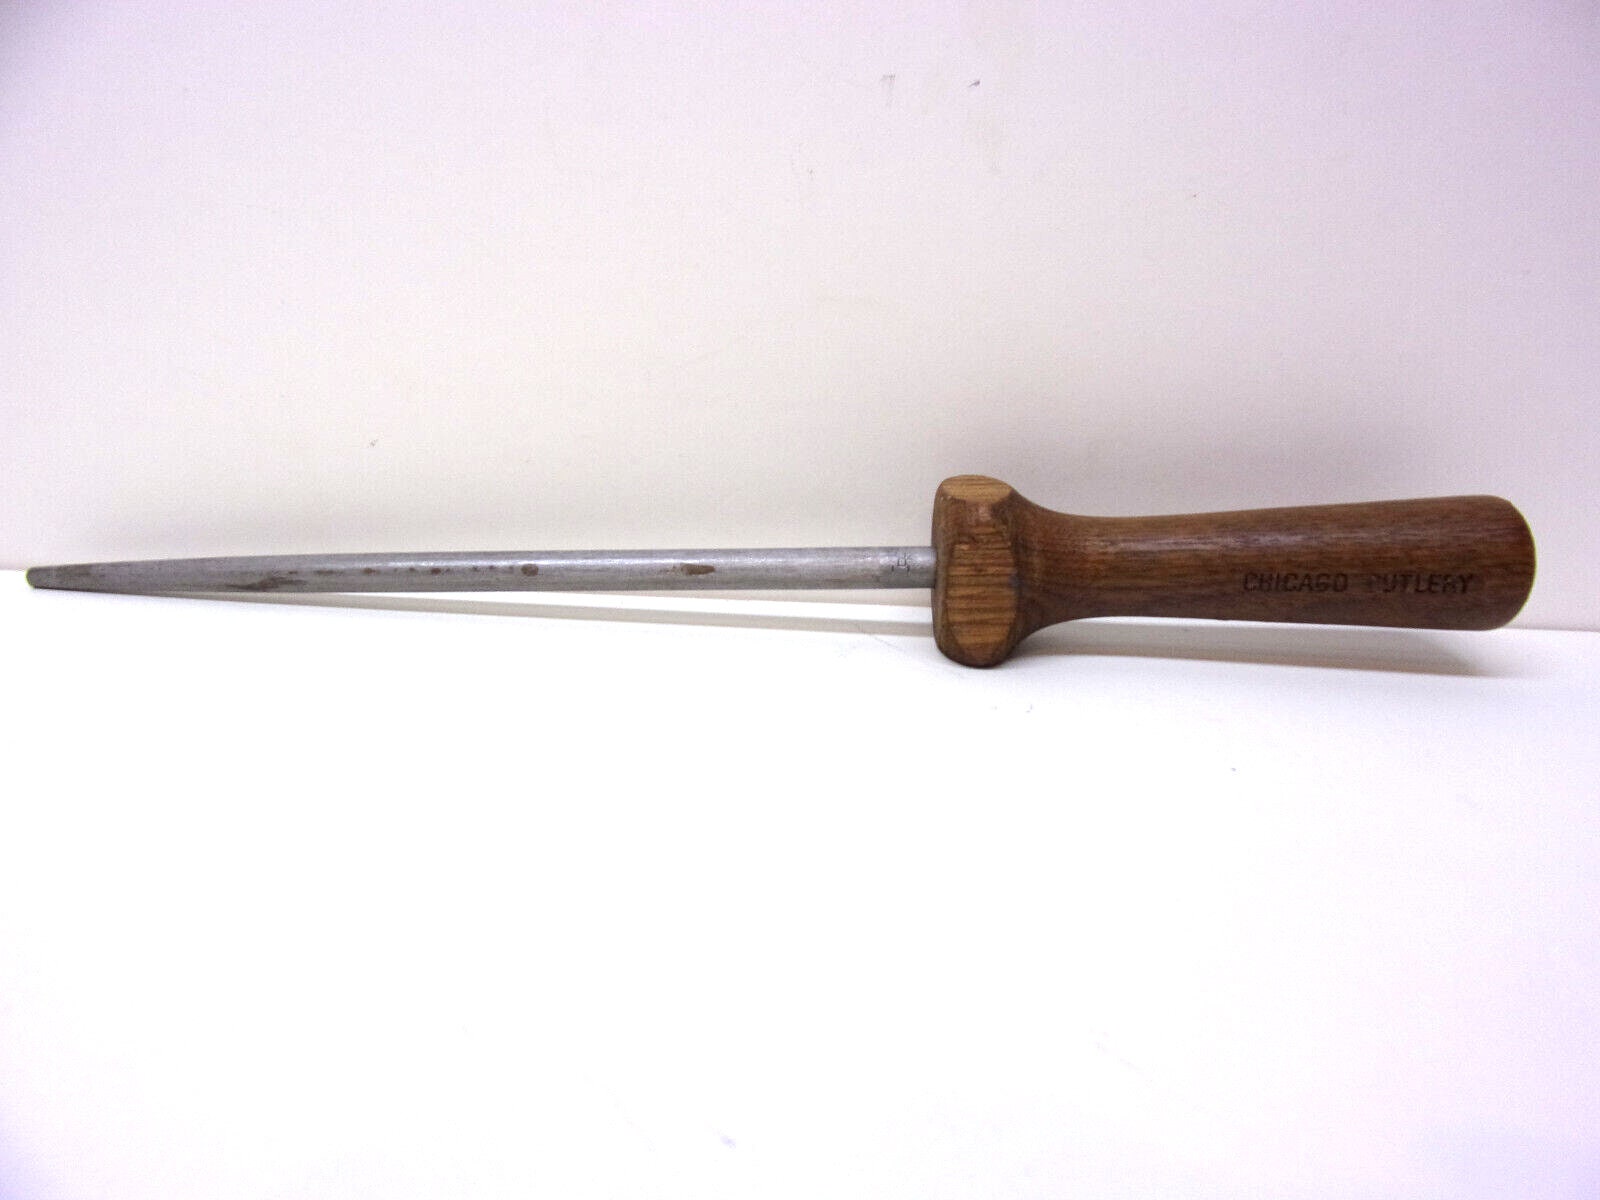 Chicago Cutlery Knife Sharpening Honing Steel Rod 12 1/4 Inch -  Denmark